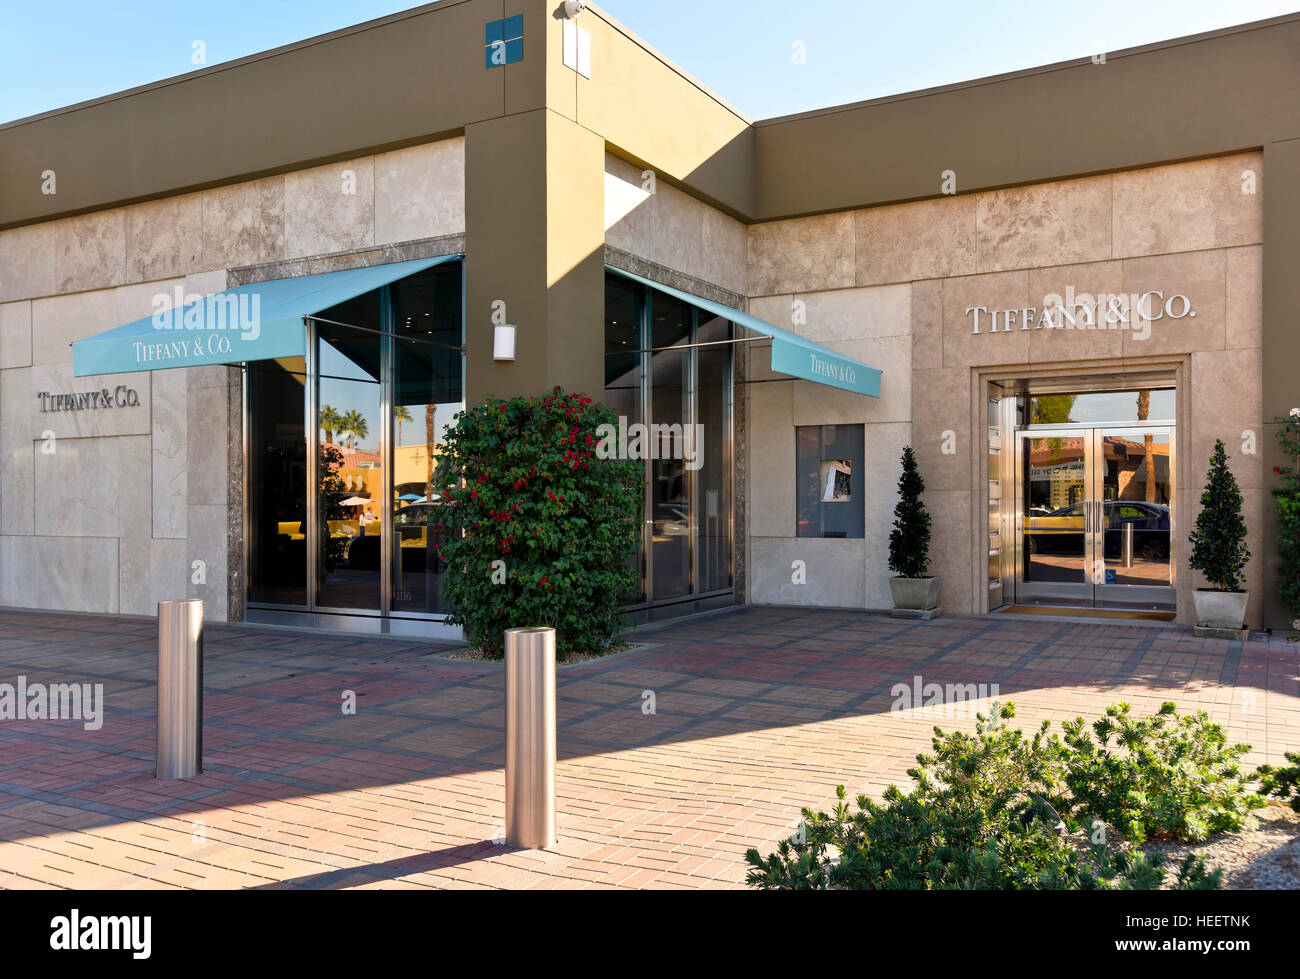 Tiffany & Co. on El Paseo Drive in Palm Desert California Stock Photo